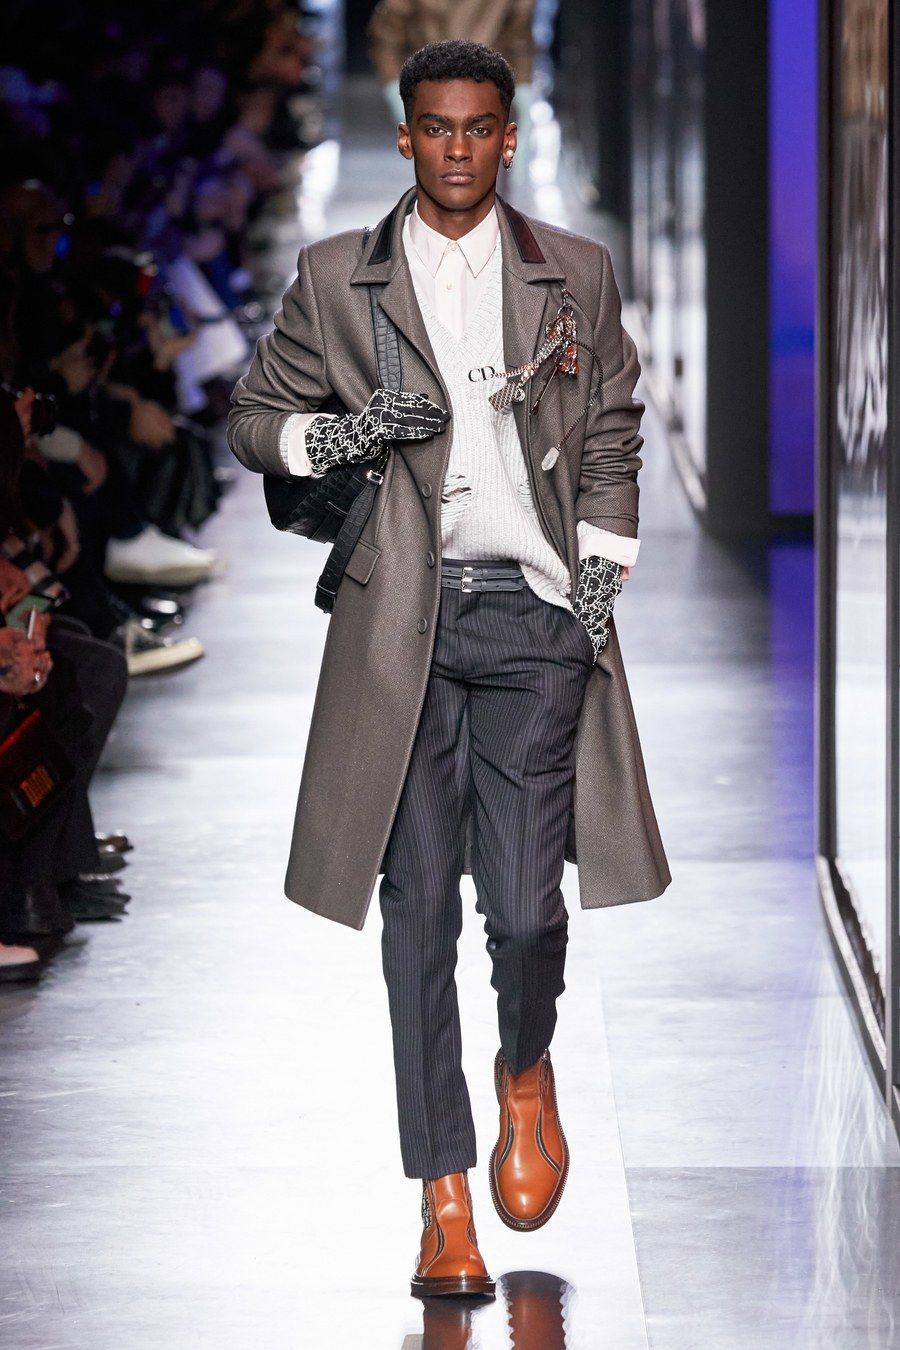 Dior Men Fall 2020 Menswear Fashion Show - Dior Men Fall 2020 Menswear Fashion Show -   19 style Mens 2020 ideas